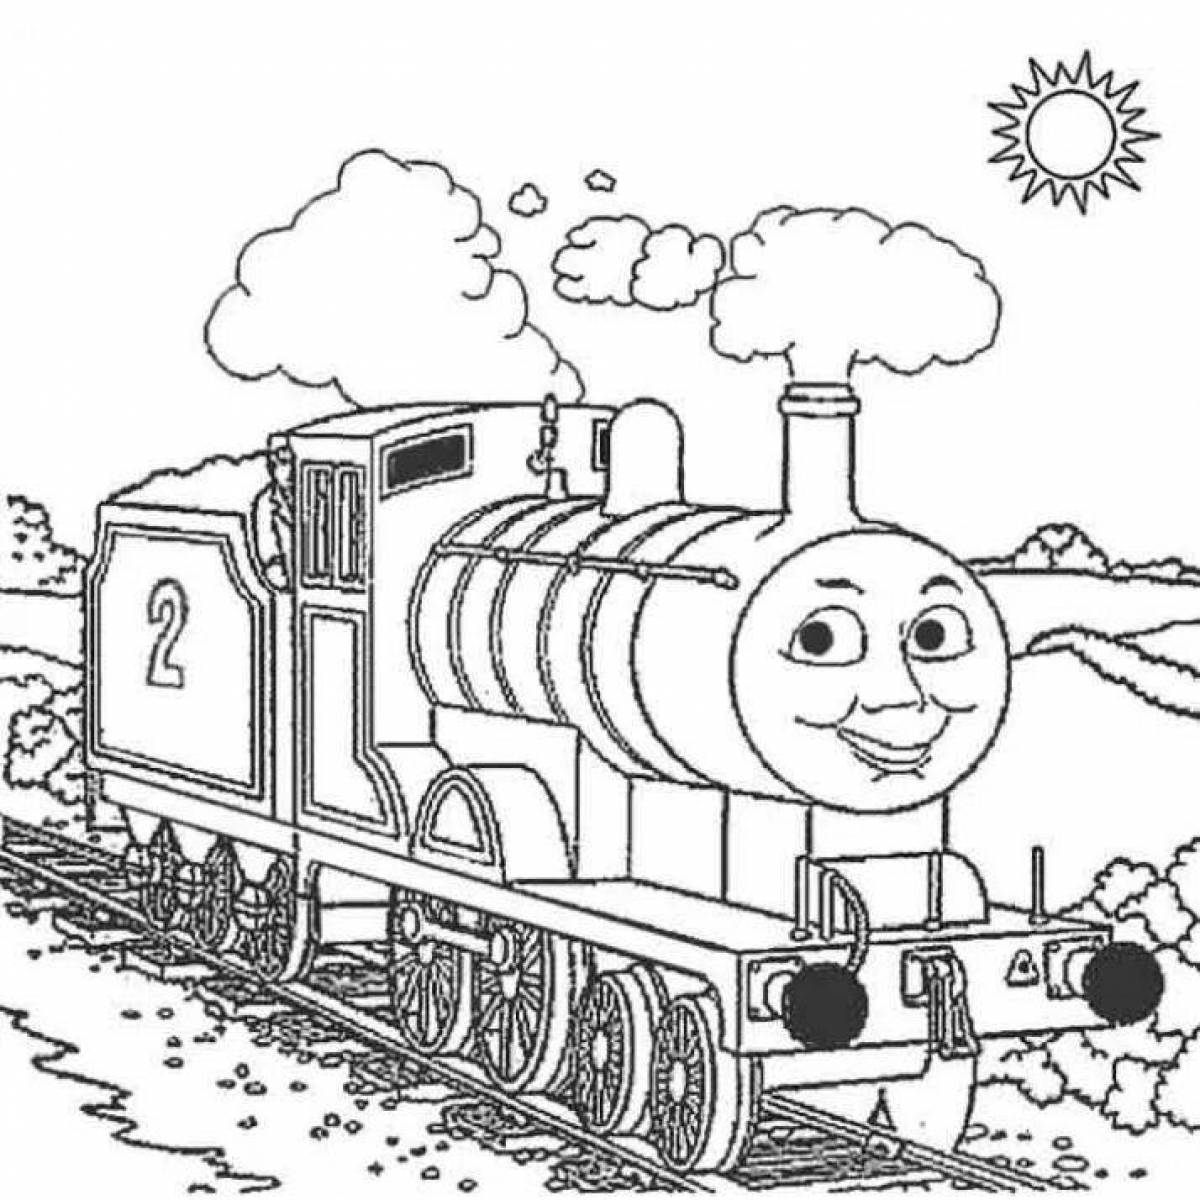 Charles locomotive #2